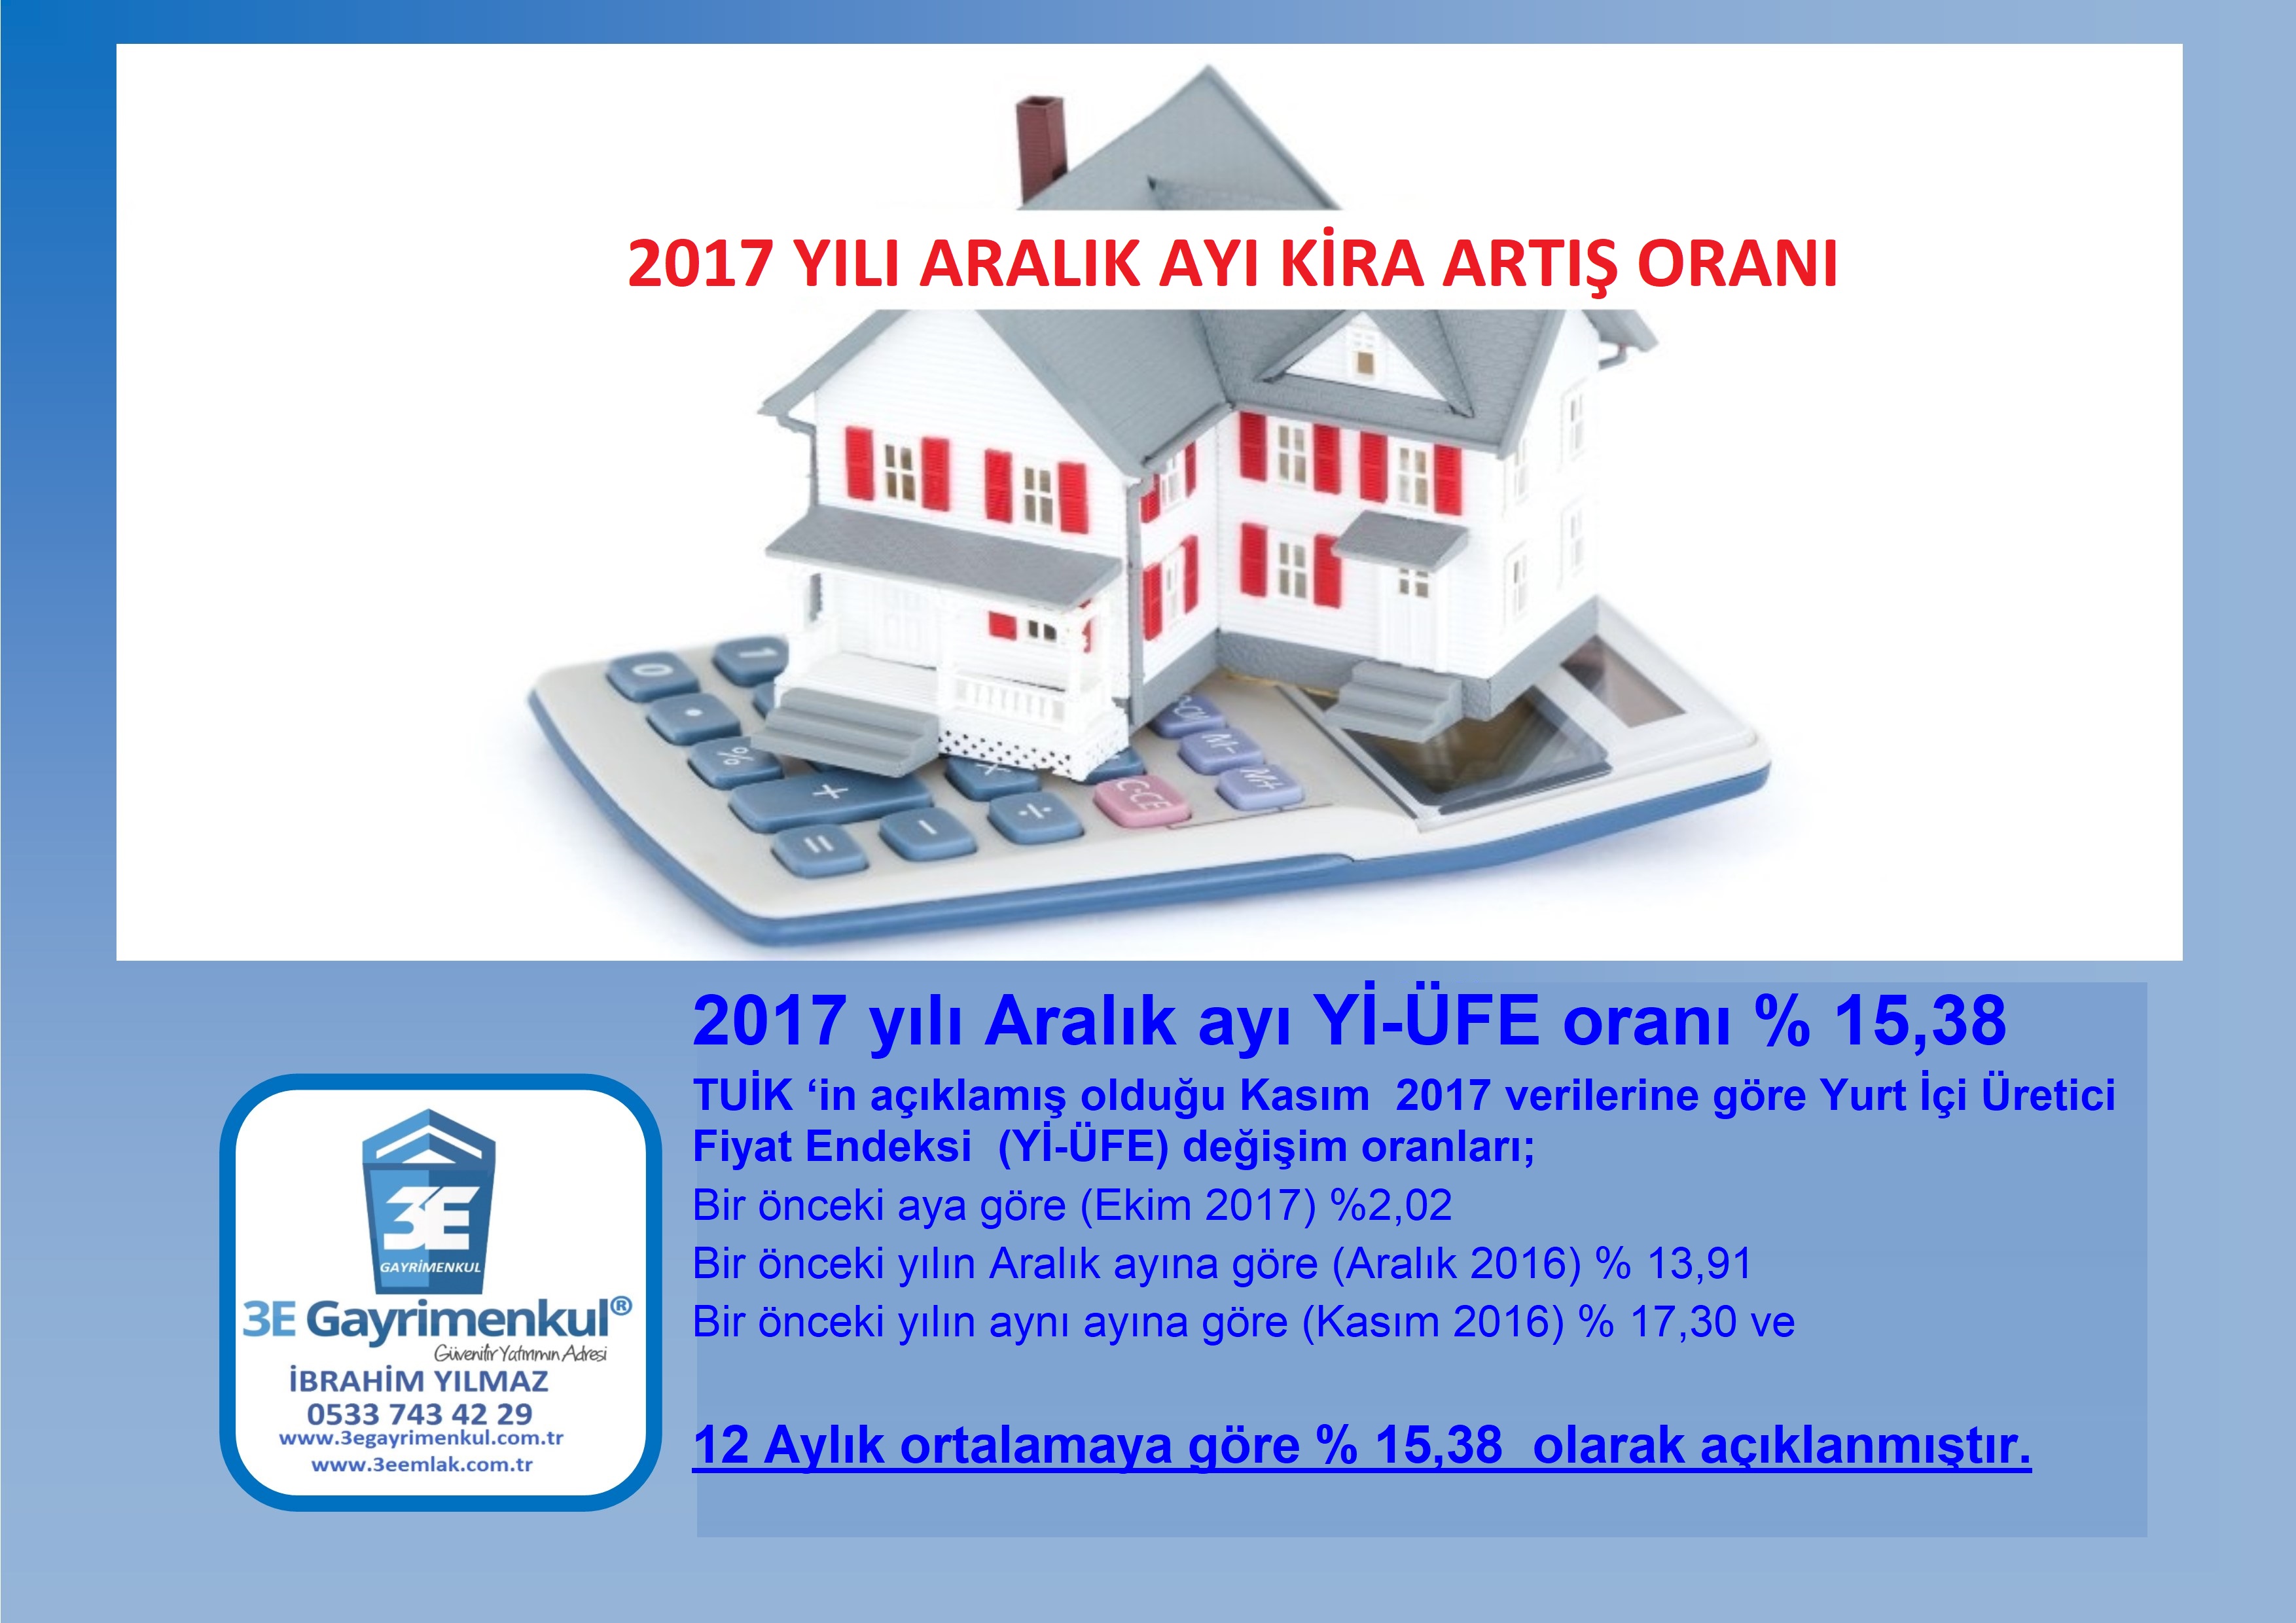 2017 YILI ARALIK AYI Yİ-ÜFE ORANI - (2017 ARALIK KİRA ARTIŞ ORANI )  05.12.2017